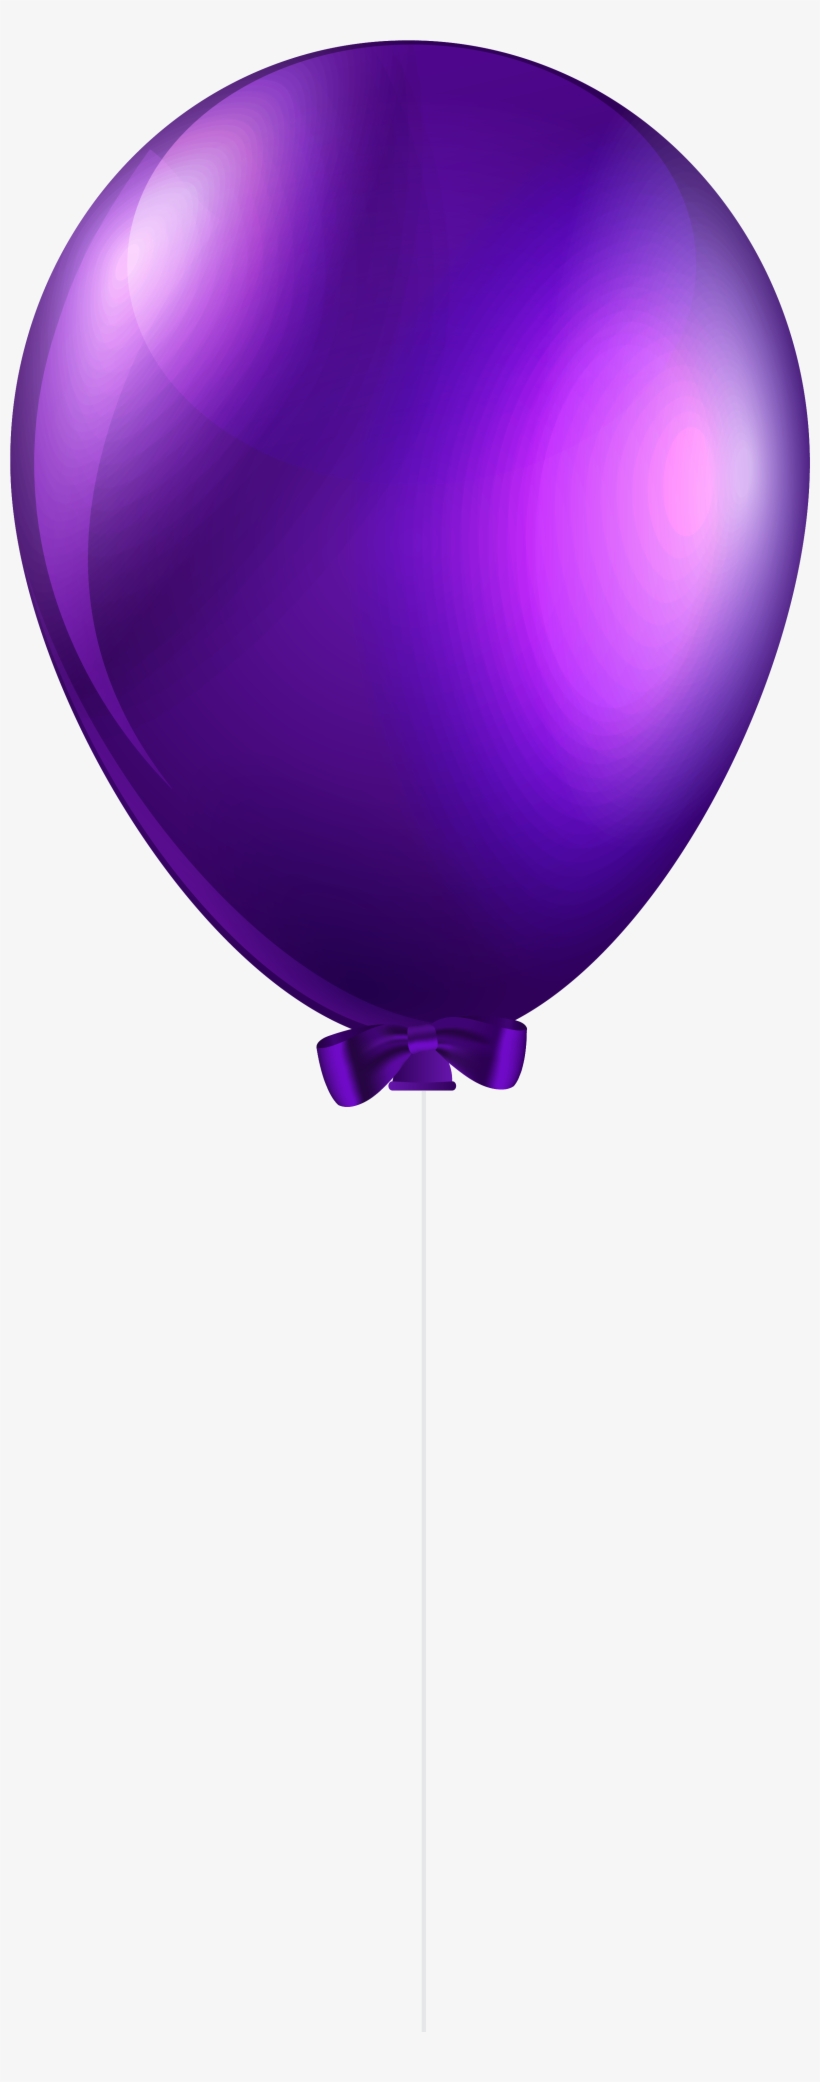 Balloon Png Clip Art - Balloon, transparent png #330262